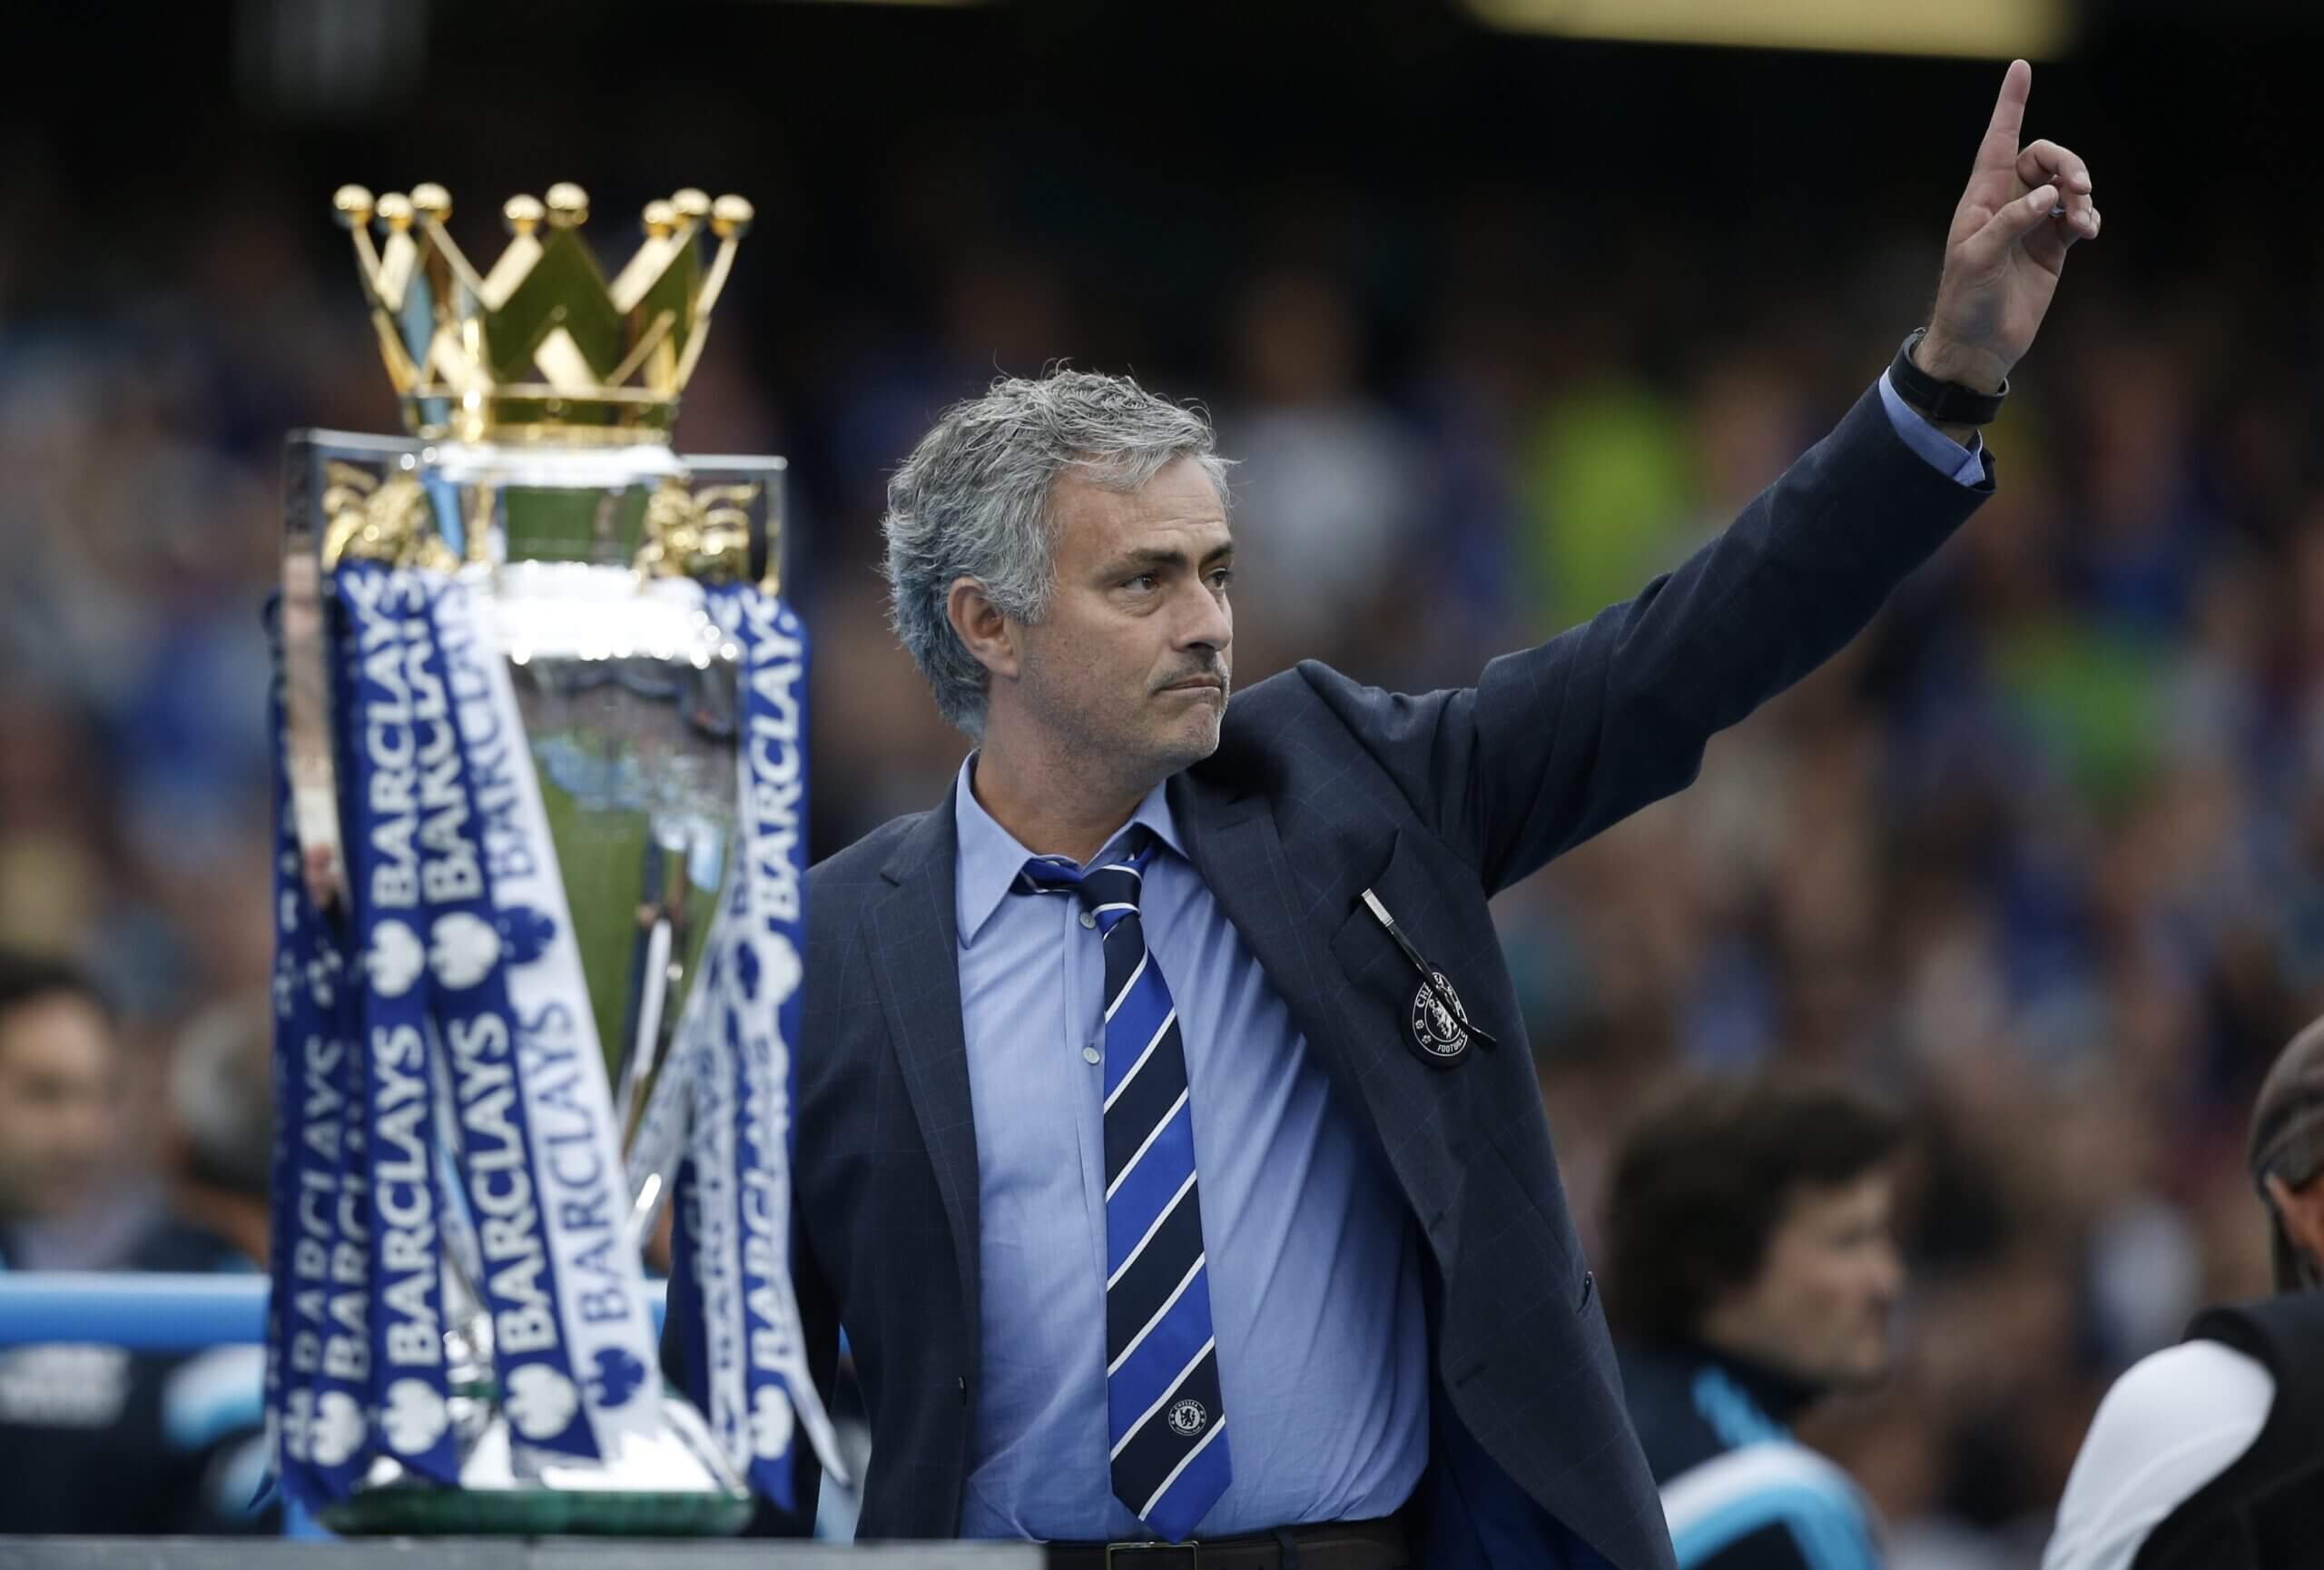 Danh hiệu VĐQG cuối cùng của Mourinho là Premier League 2014/15 tại Chelsea